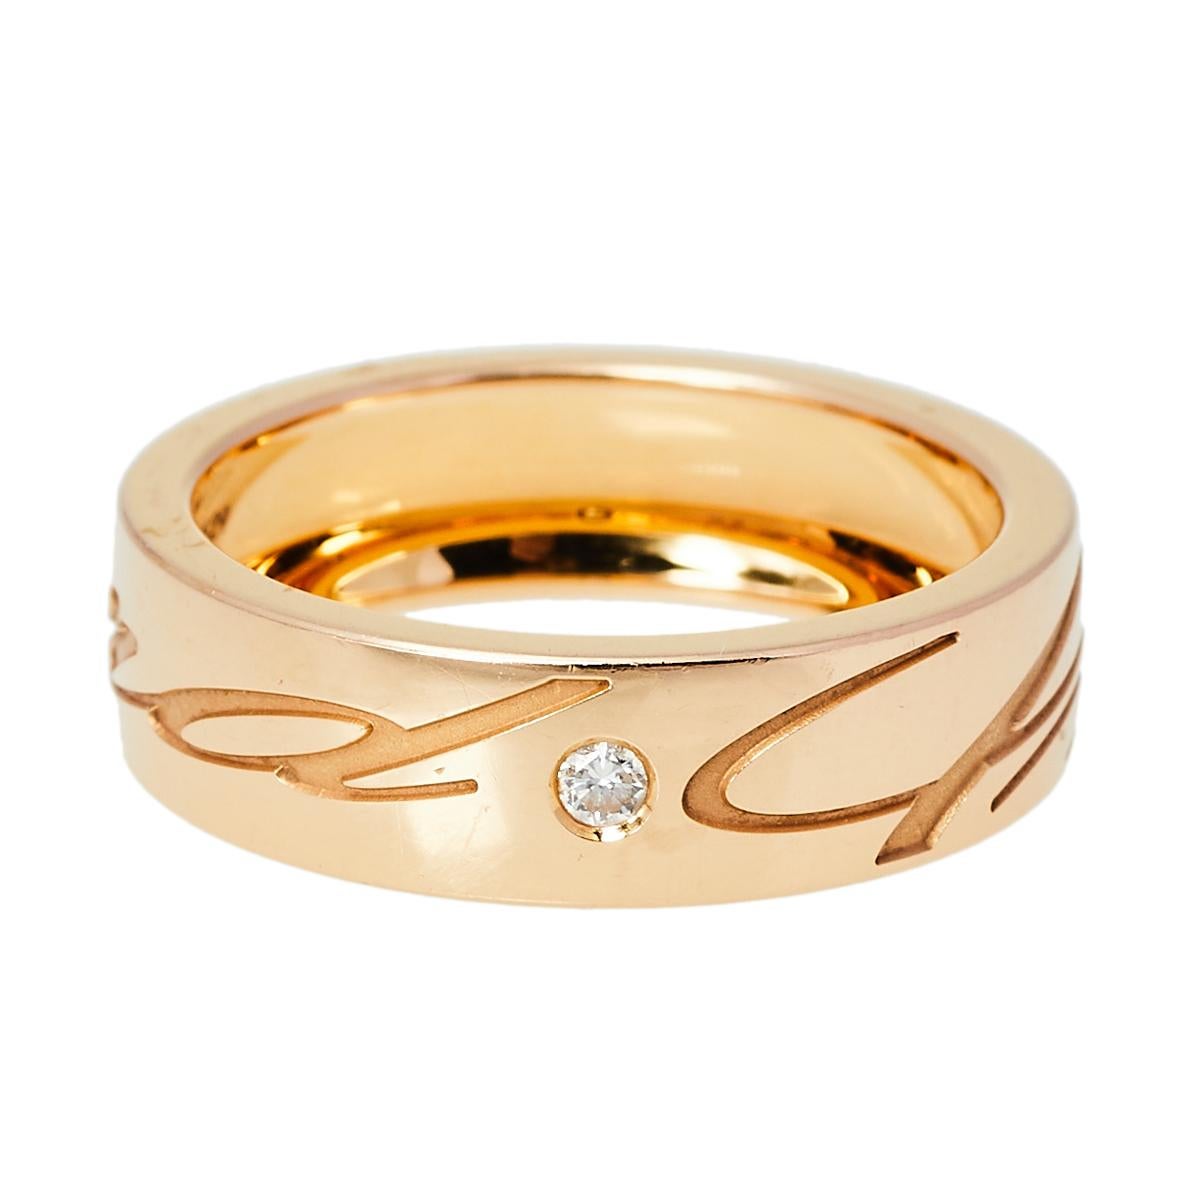 Chopard Chopardissimo 18K Rose Gold Band Ring Size EU 57